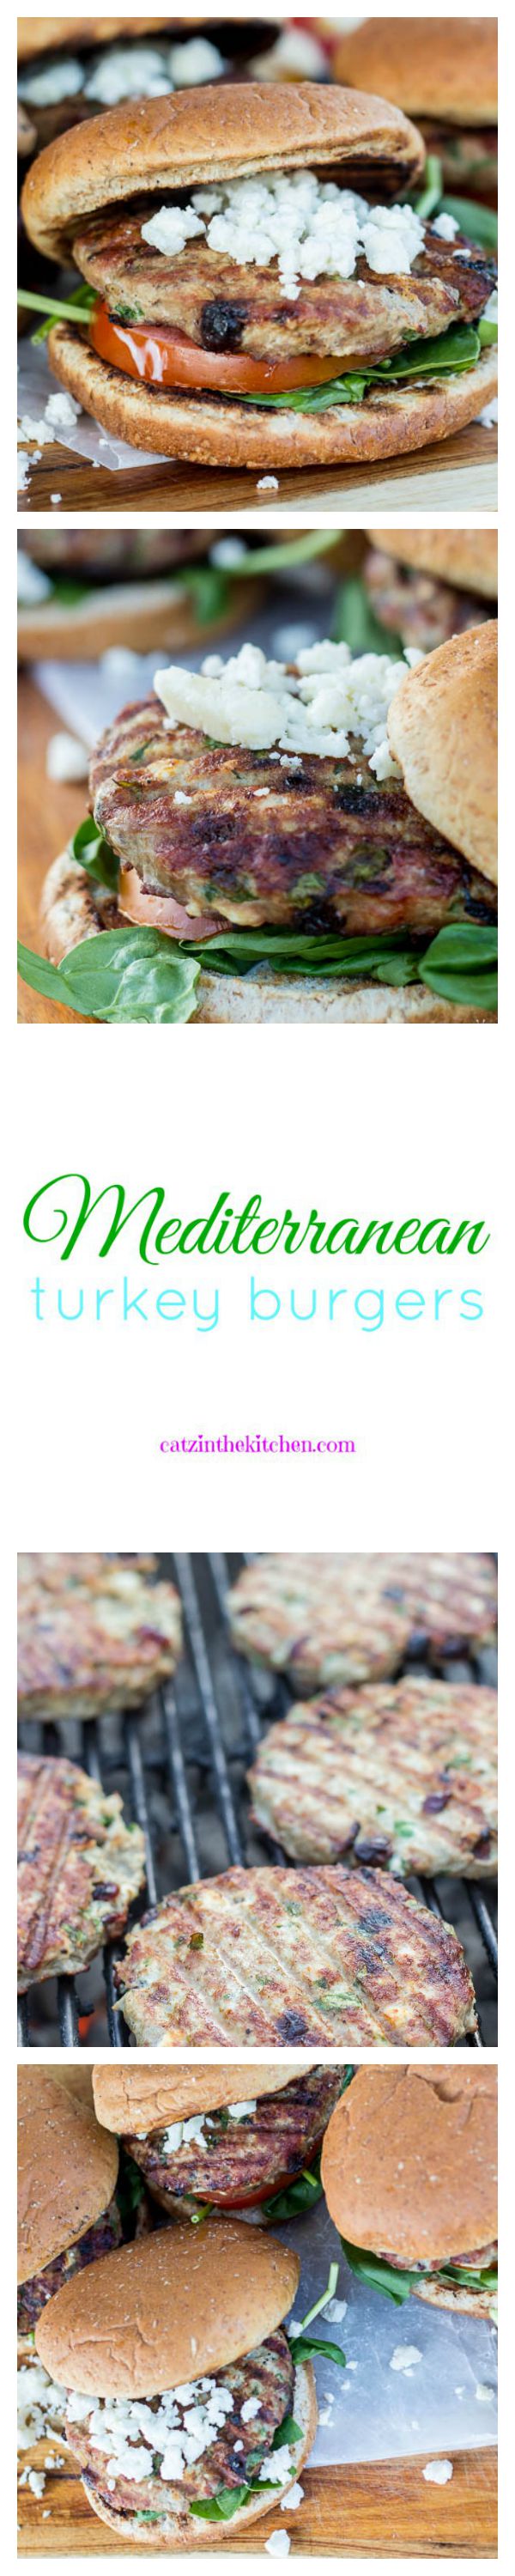 Mediterranean Turkey Burgers | Catz in the Kitchen | catzinthekitchen.com | #burgers